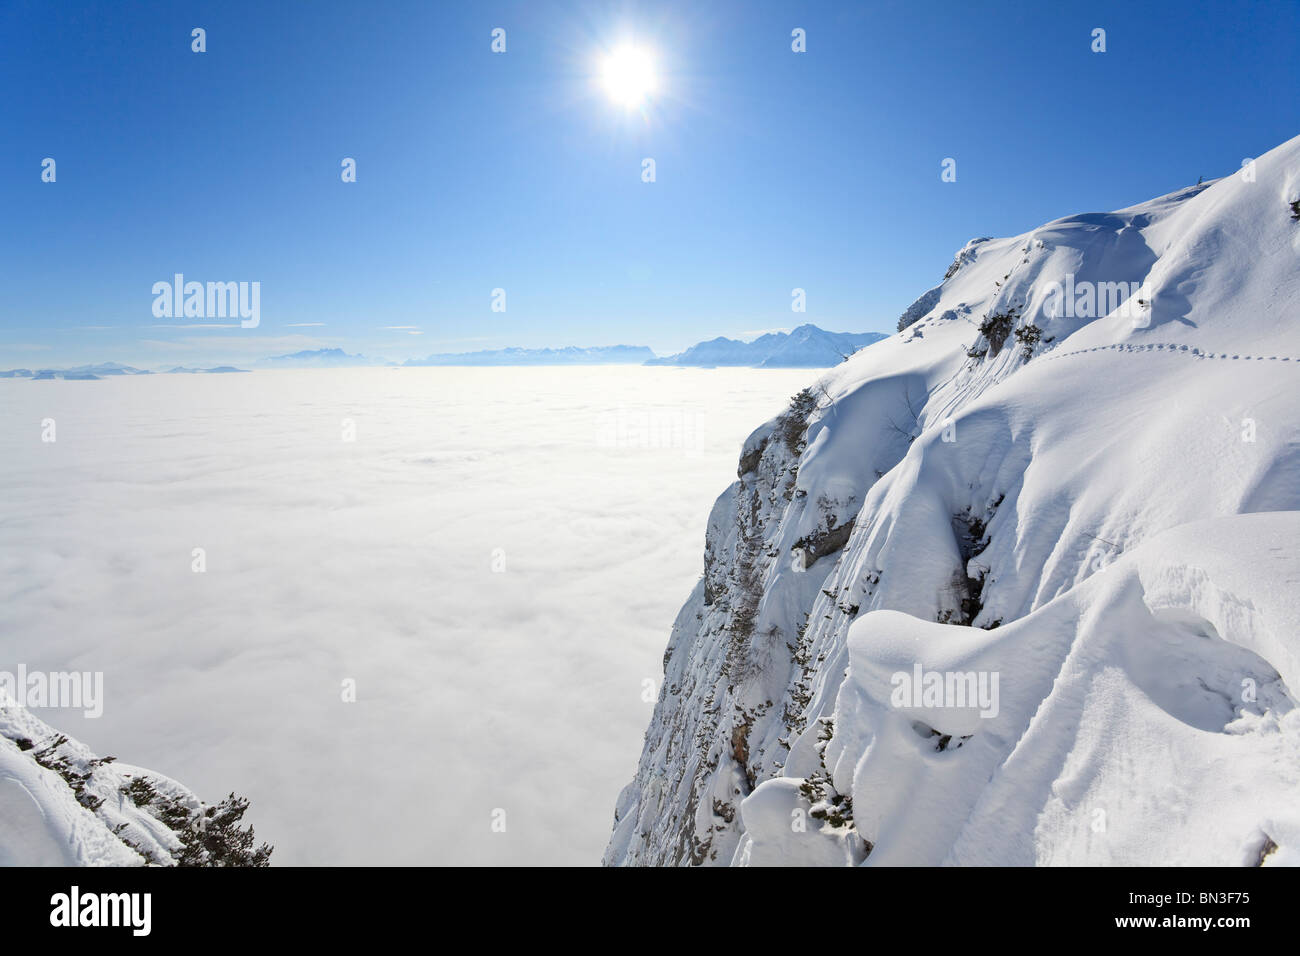 Fog covering the Salzachtal, Berchtesgaden Alps, Salzburger Land, Austria Stock Photo